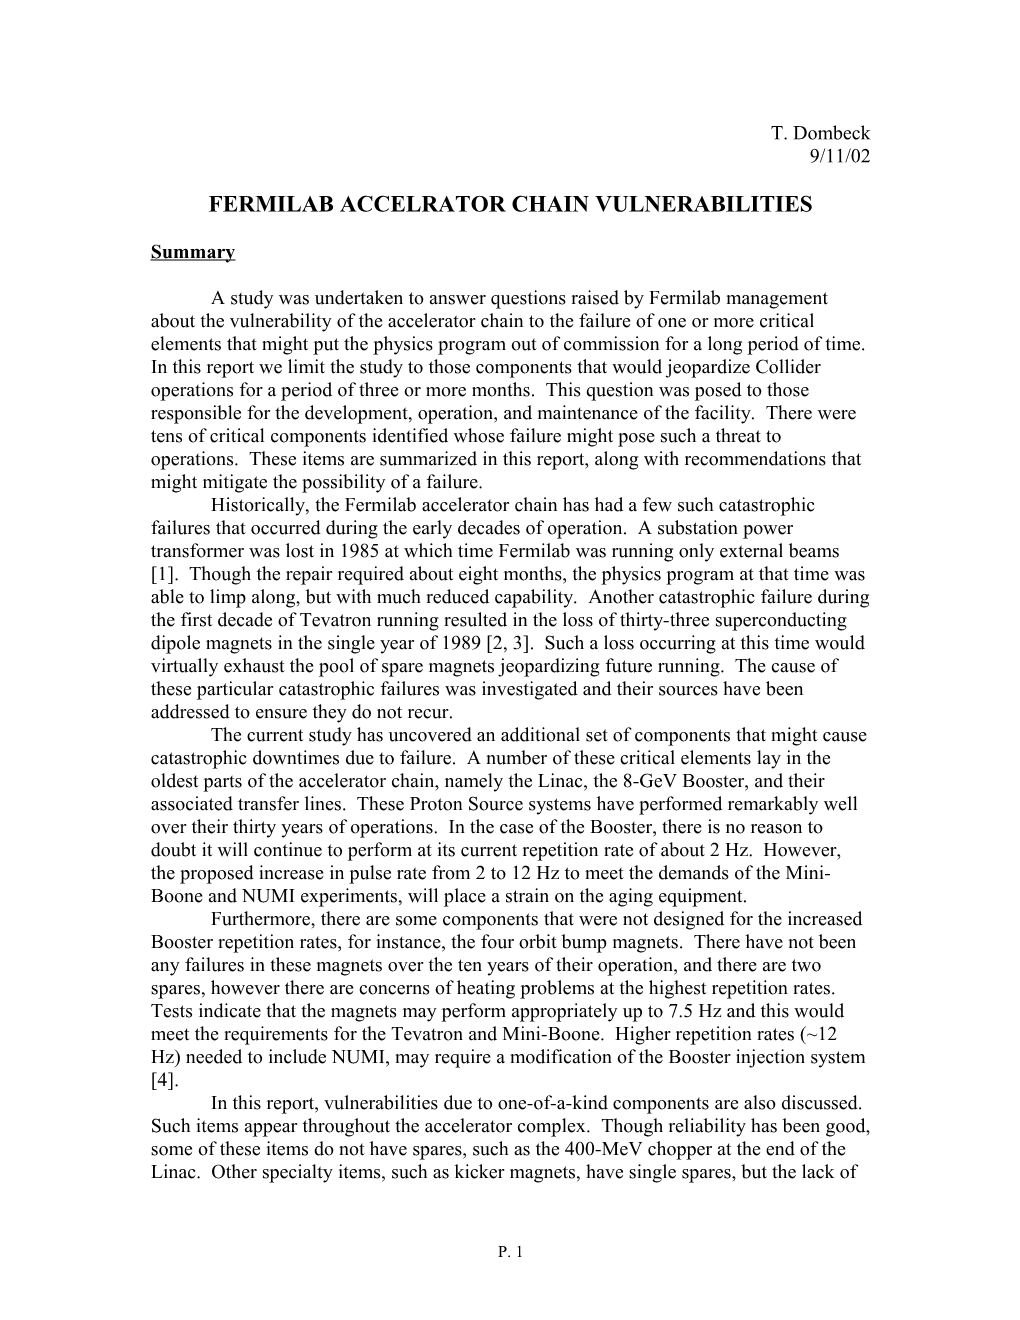 Fermilab Accelrator Chain Vulnerabilities